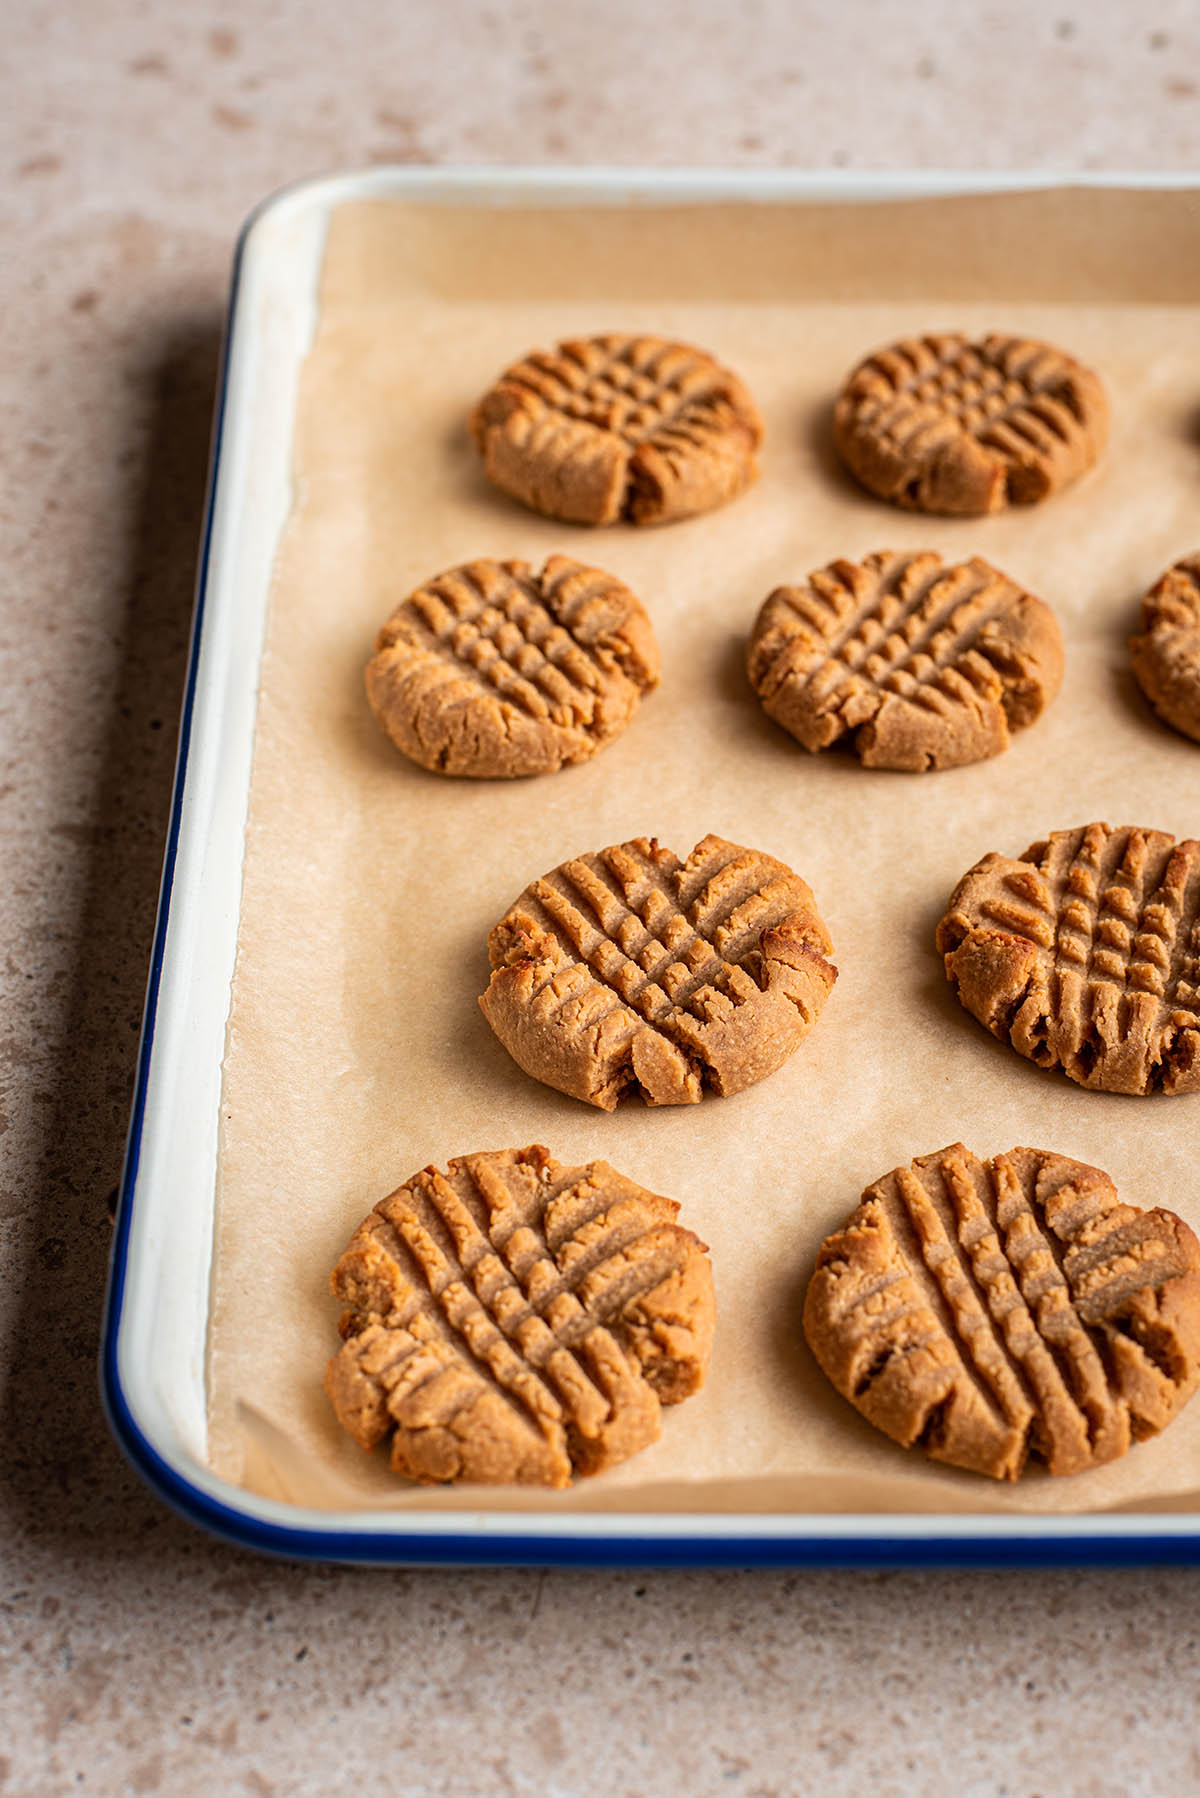 Baked cross-hatch gluten free peanut butter cookies on a tray.